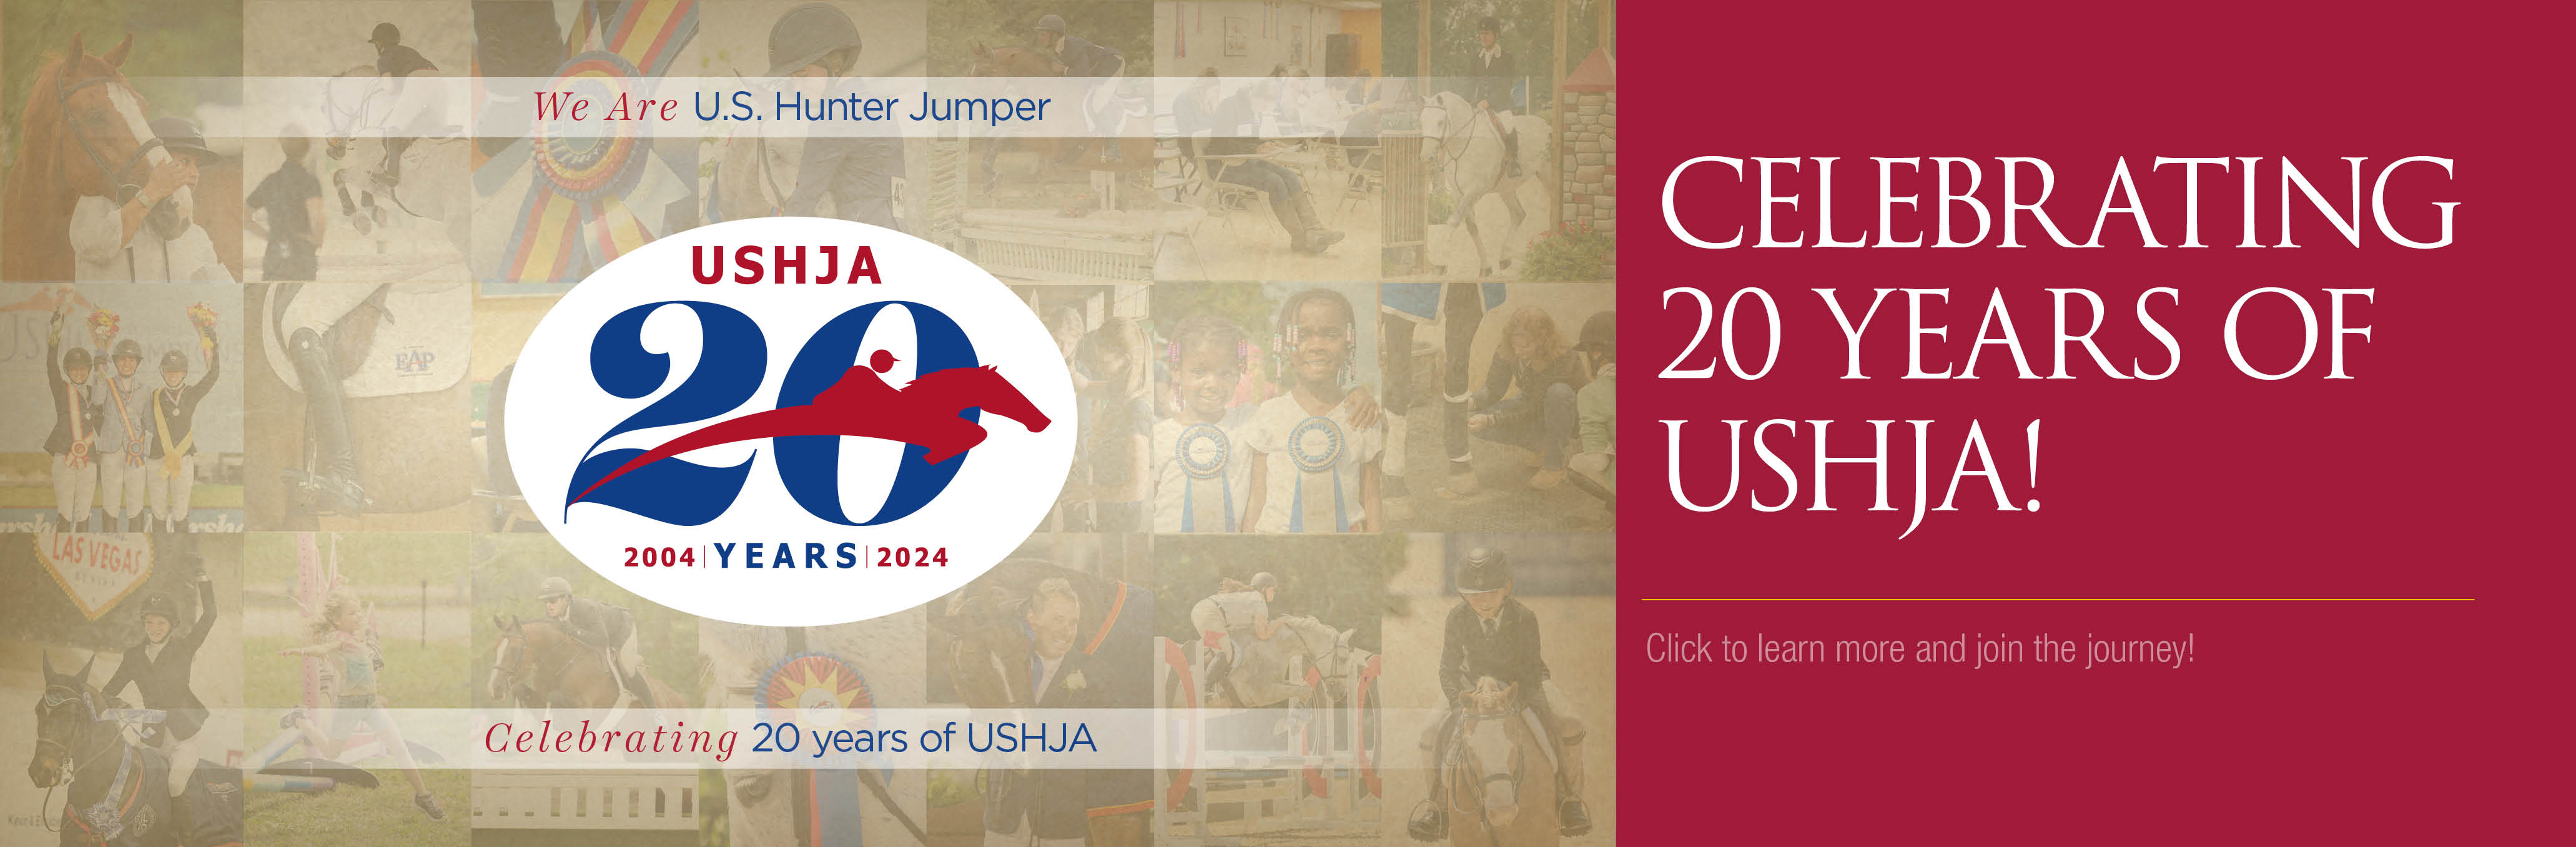 The United States Hunter Jumper Association (USHJA)